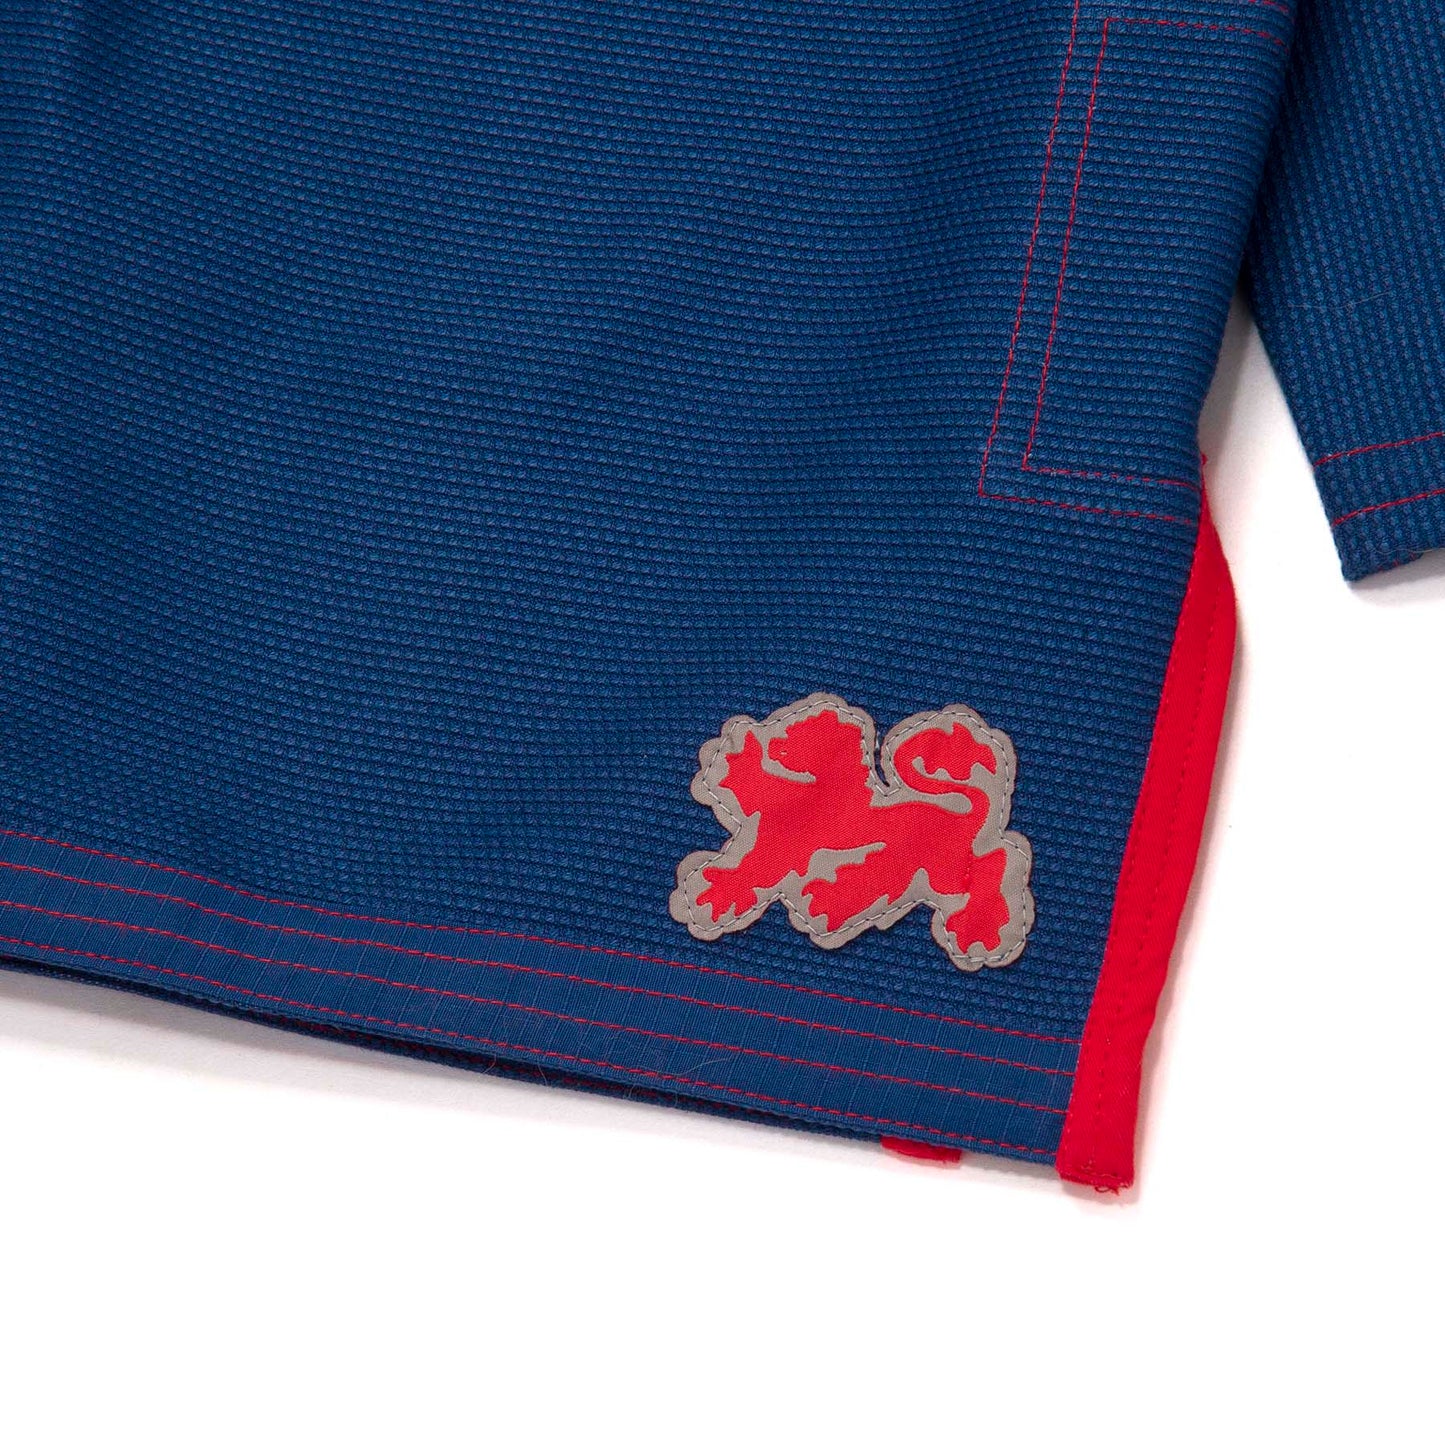 Superlite Retro Kimono [Blue]